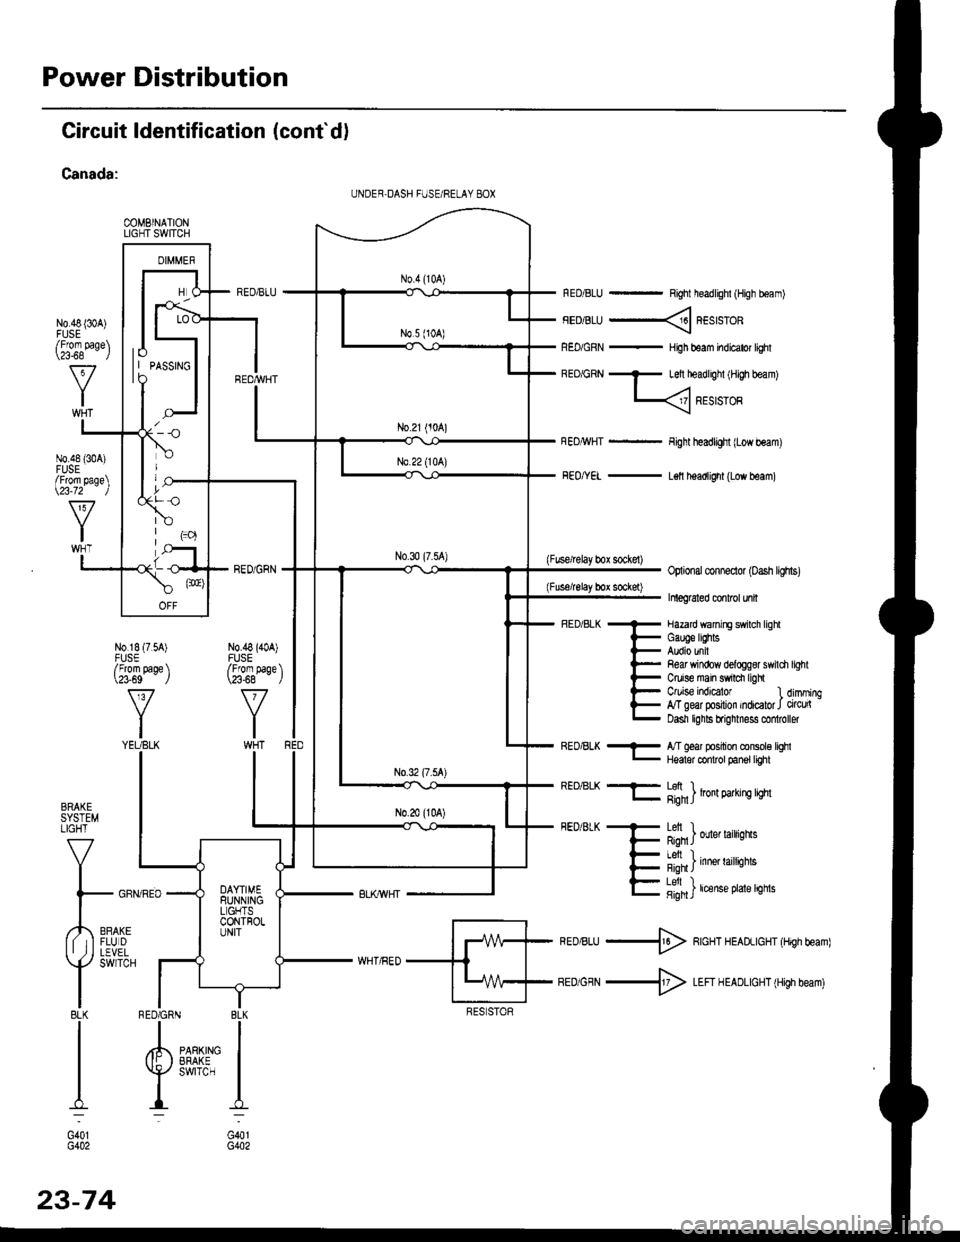 HONDA CIVIC 1996 6.G Owners Manual Power Distribution
Circuit ldentification (contd)
Canada:
COMBINATIONLIGHT SWITCH
N0.48 {30A)
RED/BLU - Right headlighl (High boam)
FEDiBLU ----< REstsTOR
REo/GRN - HiJh beam indicator lighl
BEo/GRN 